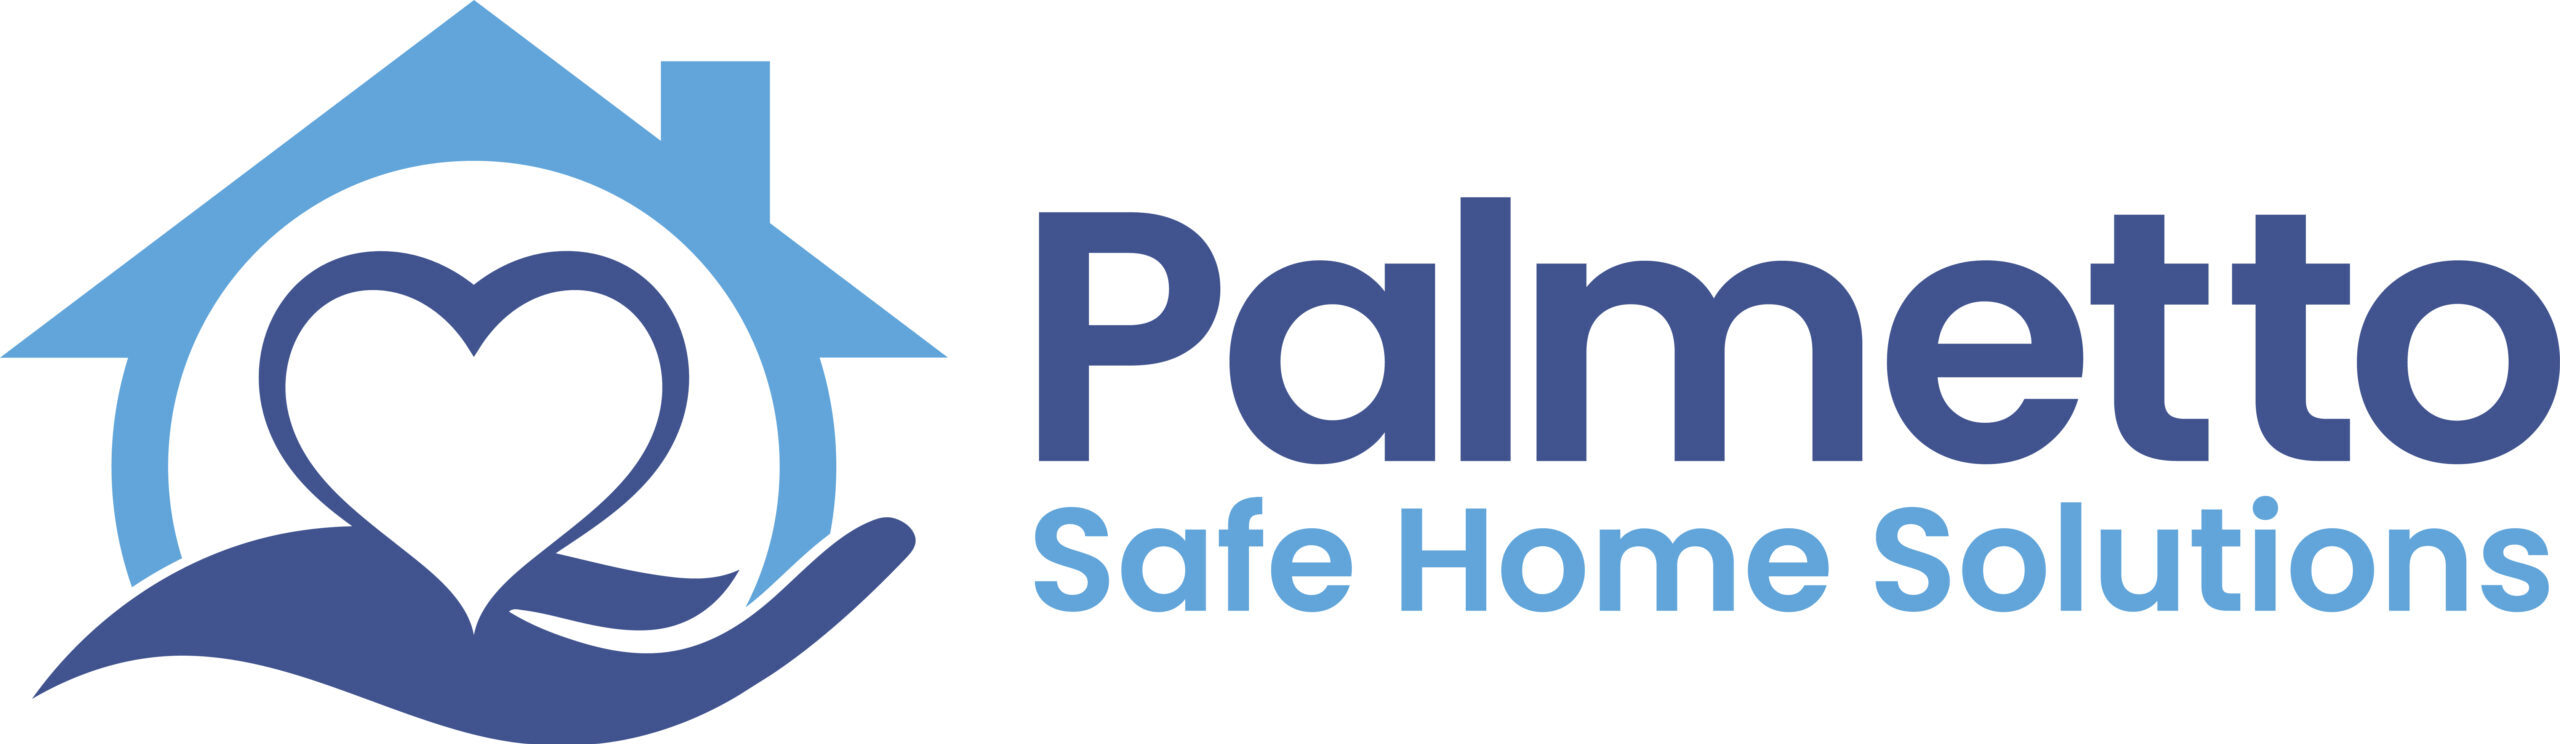 Palmetto Safe Home Solutions